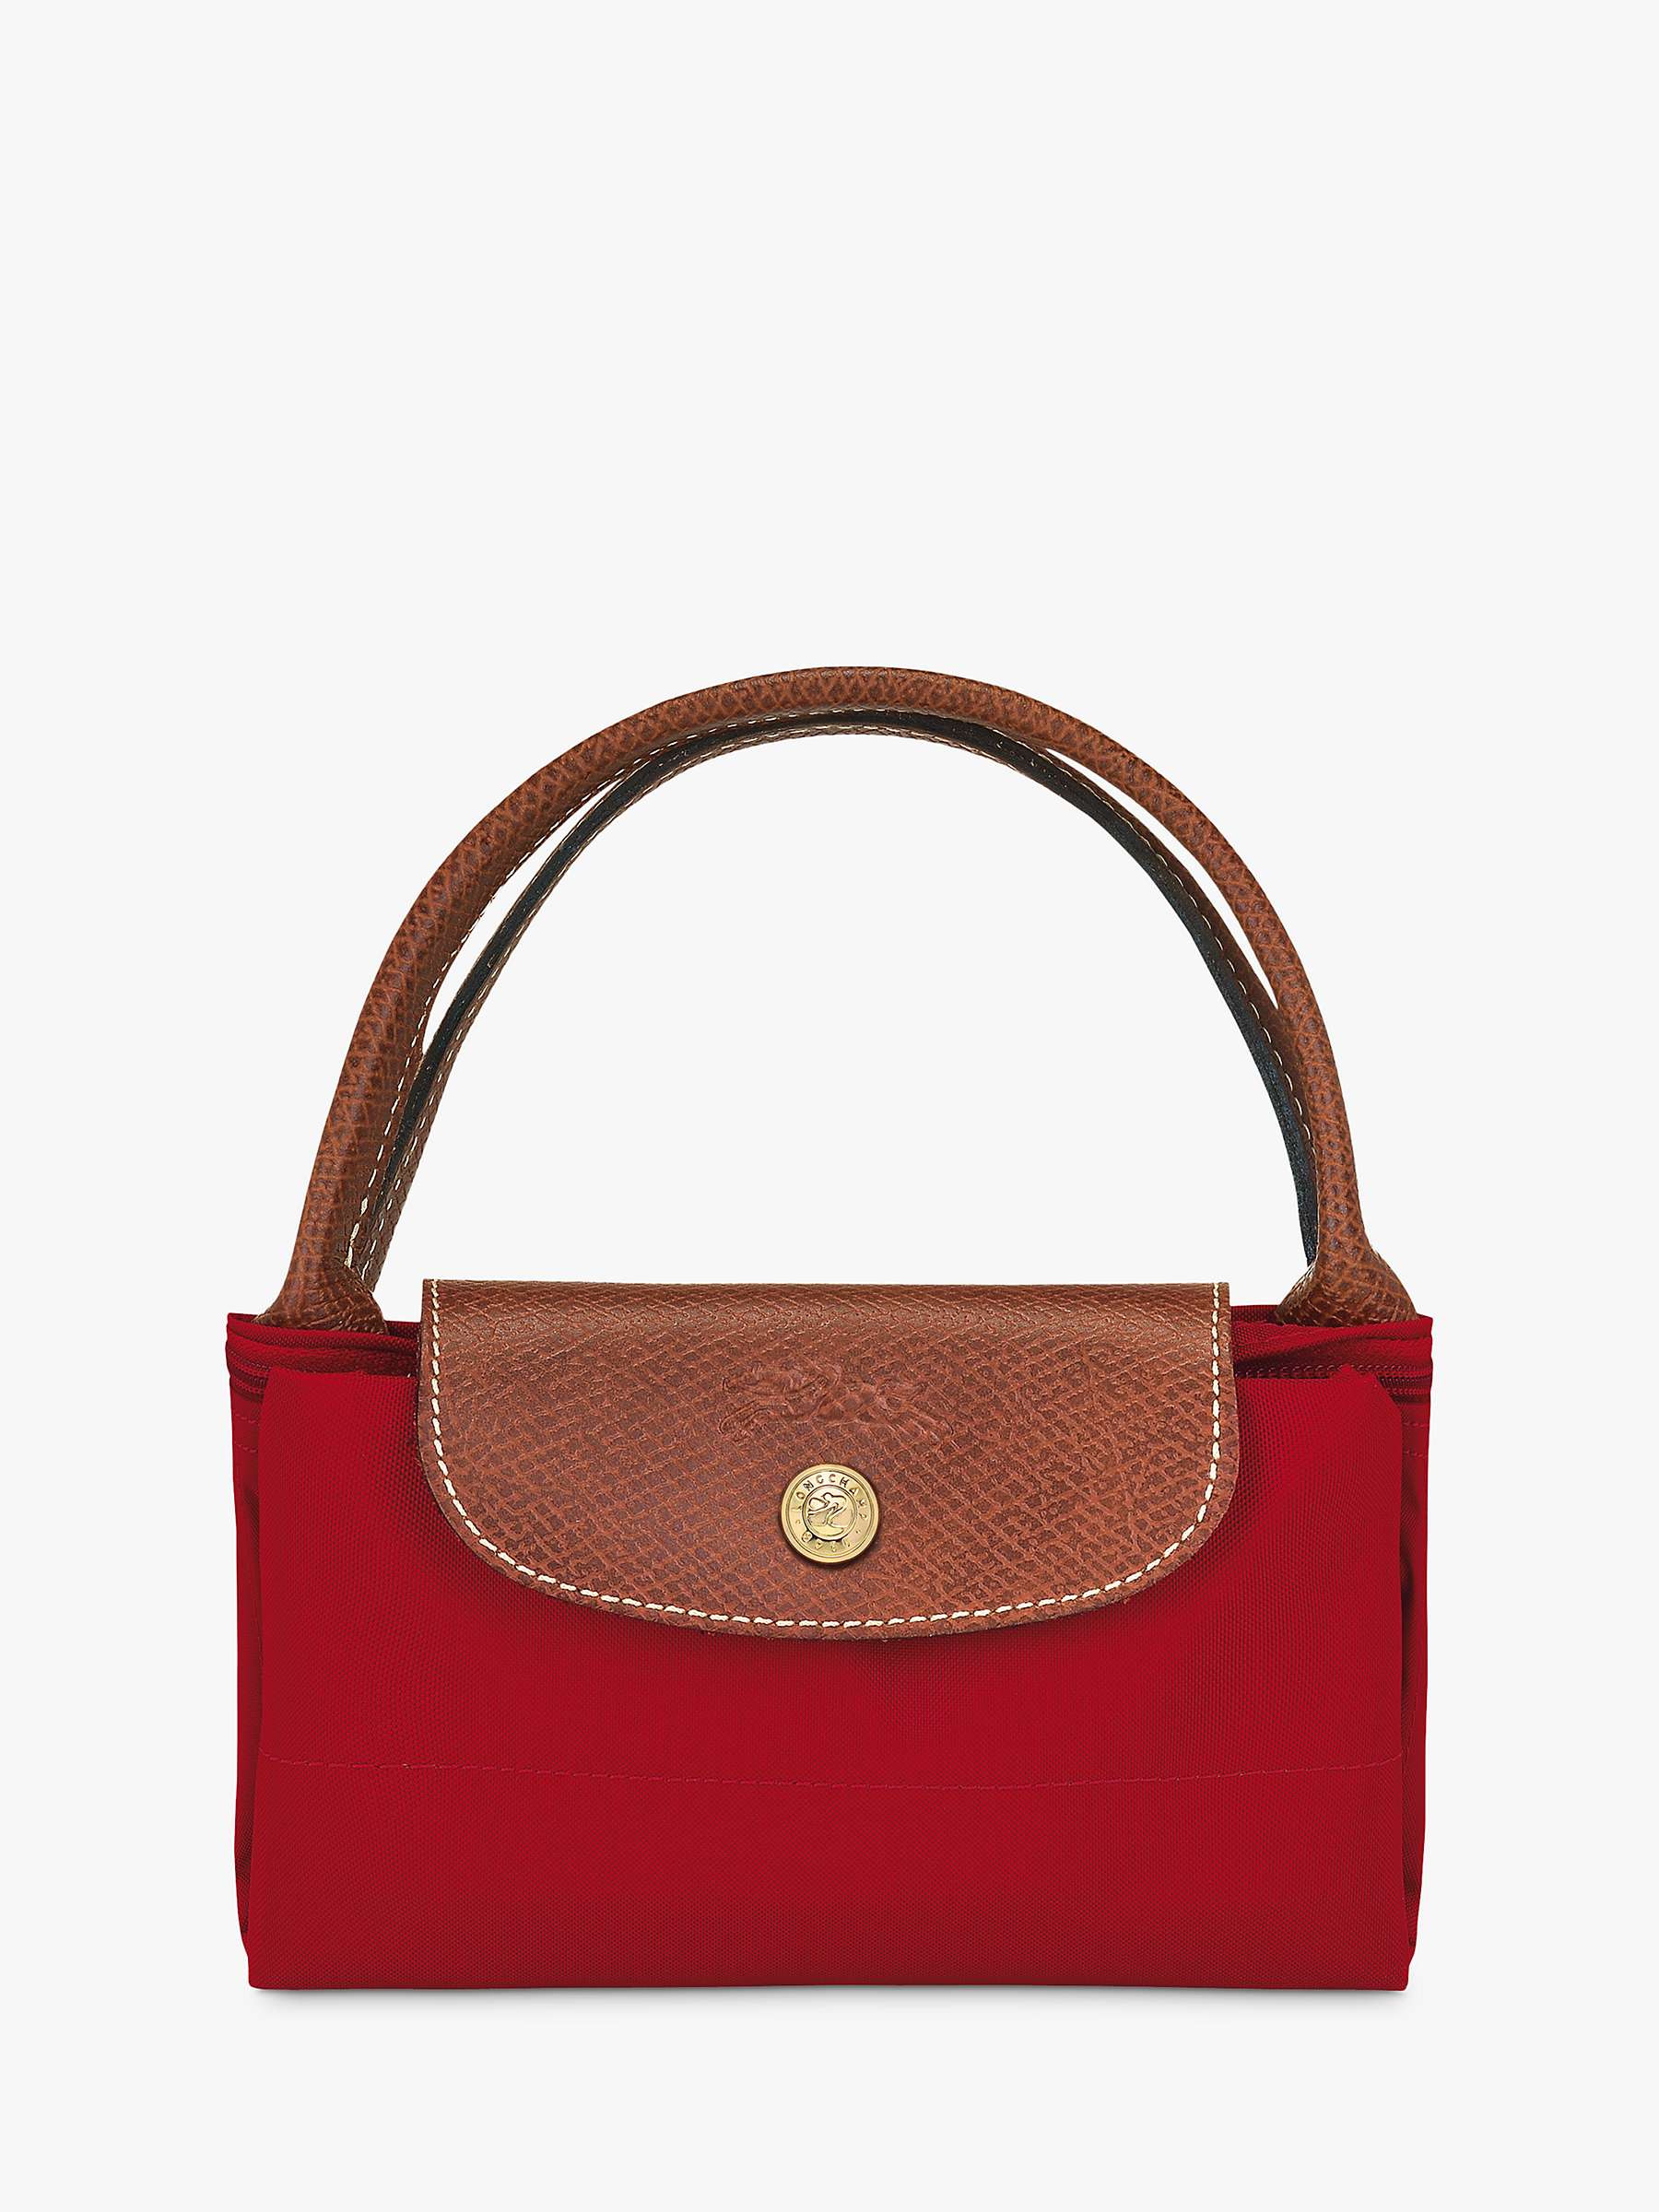 Longchamp Le Pliage Original Small Top Handle Bag, Red at John Lewis & Partners